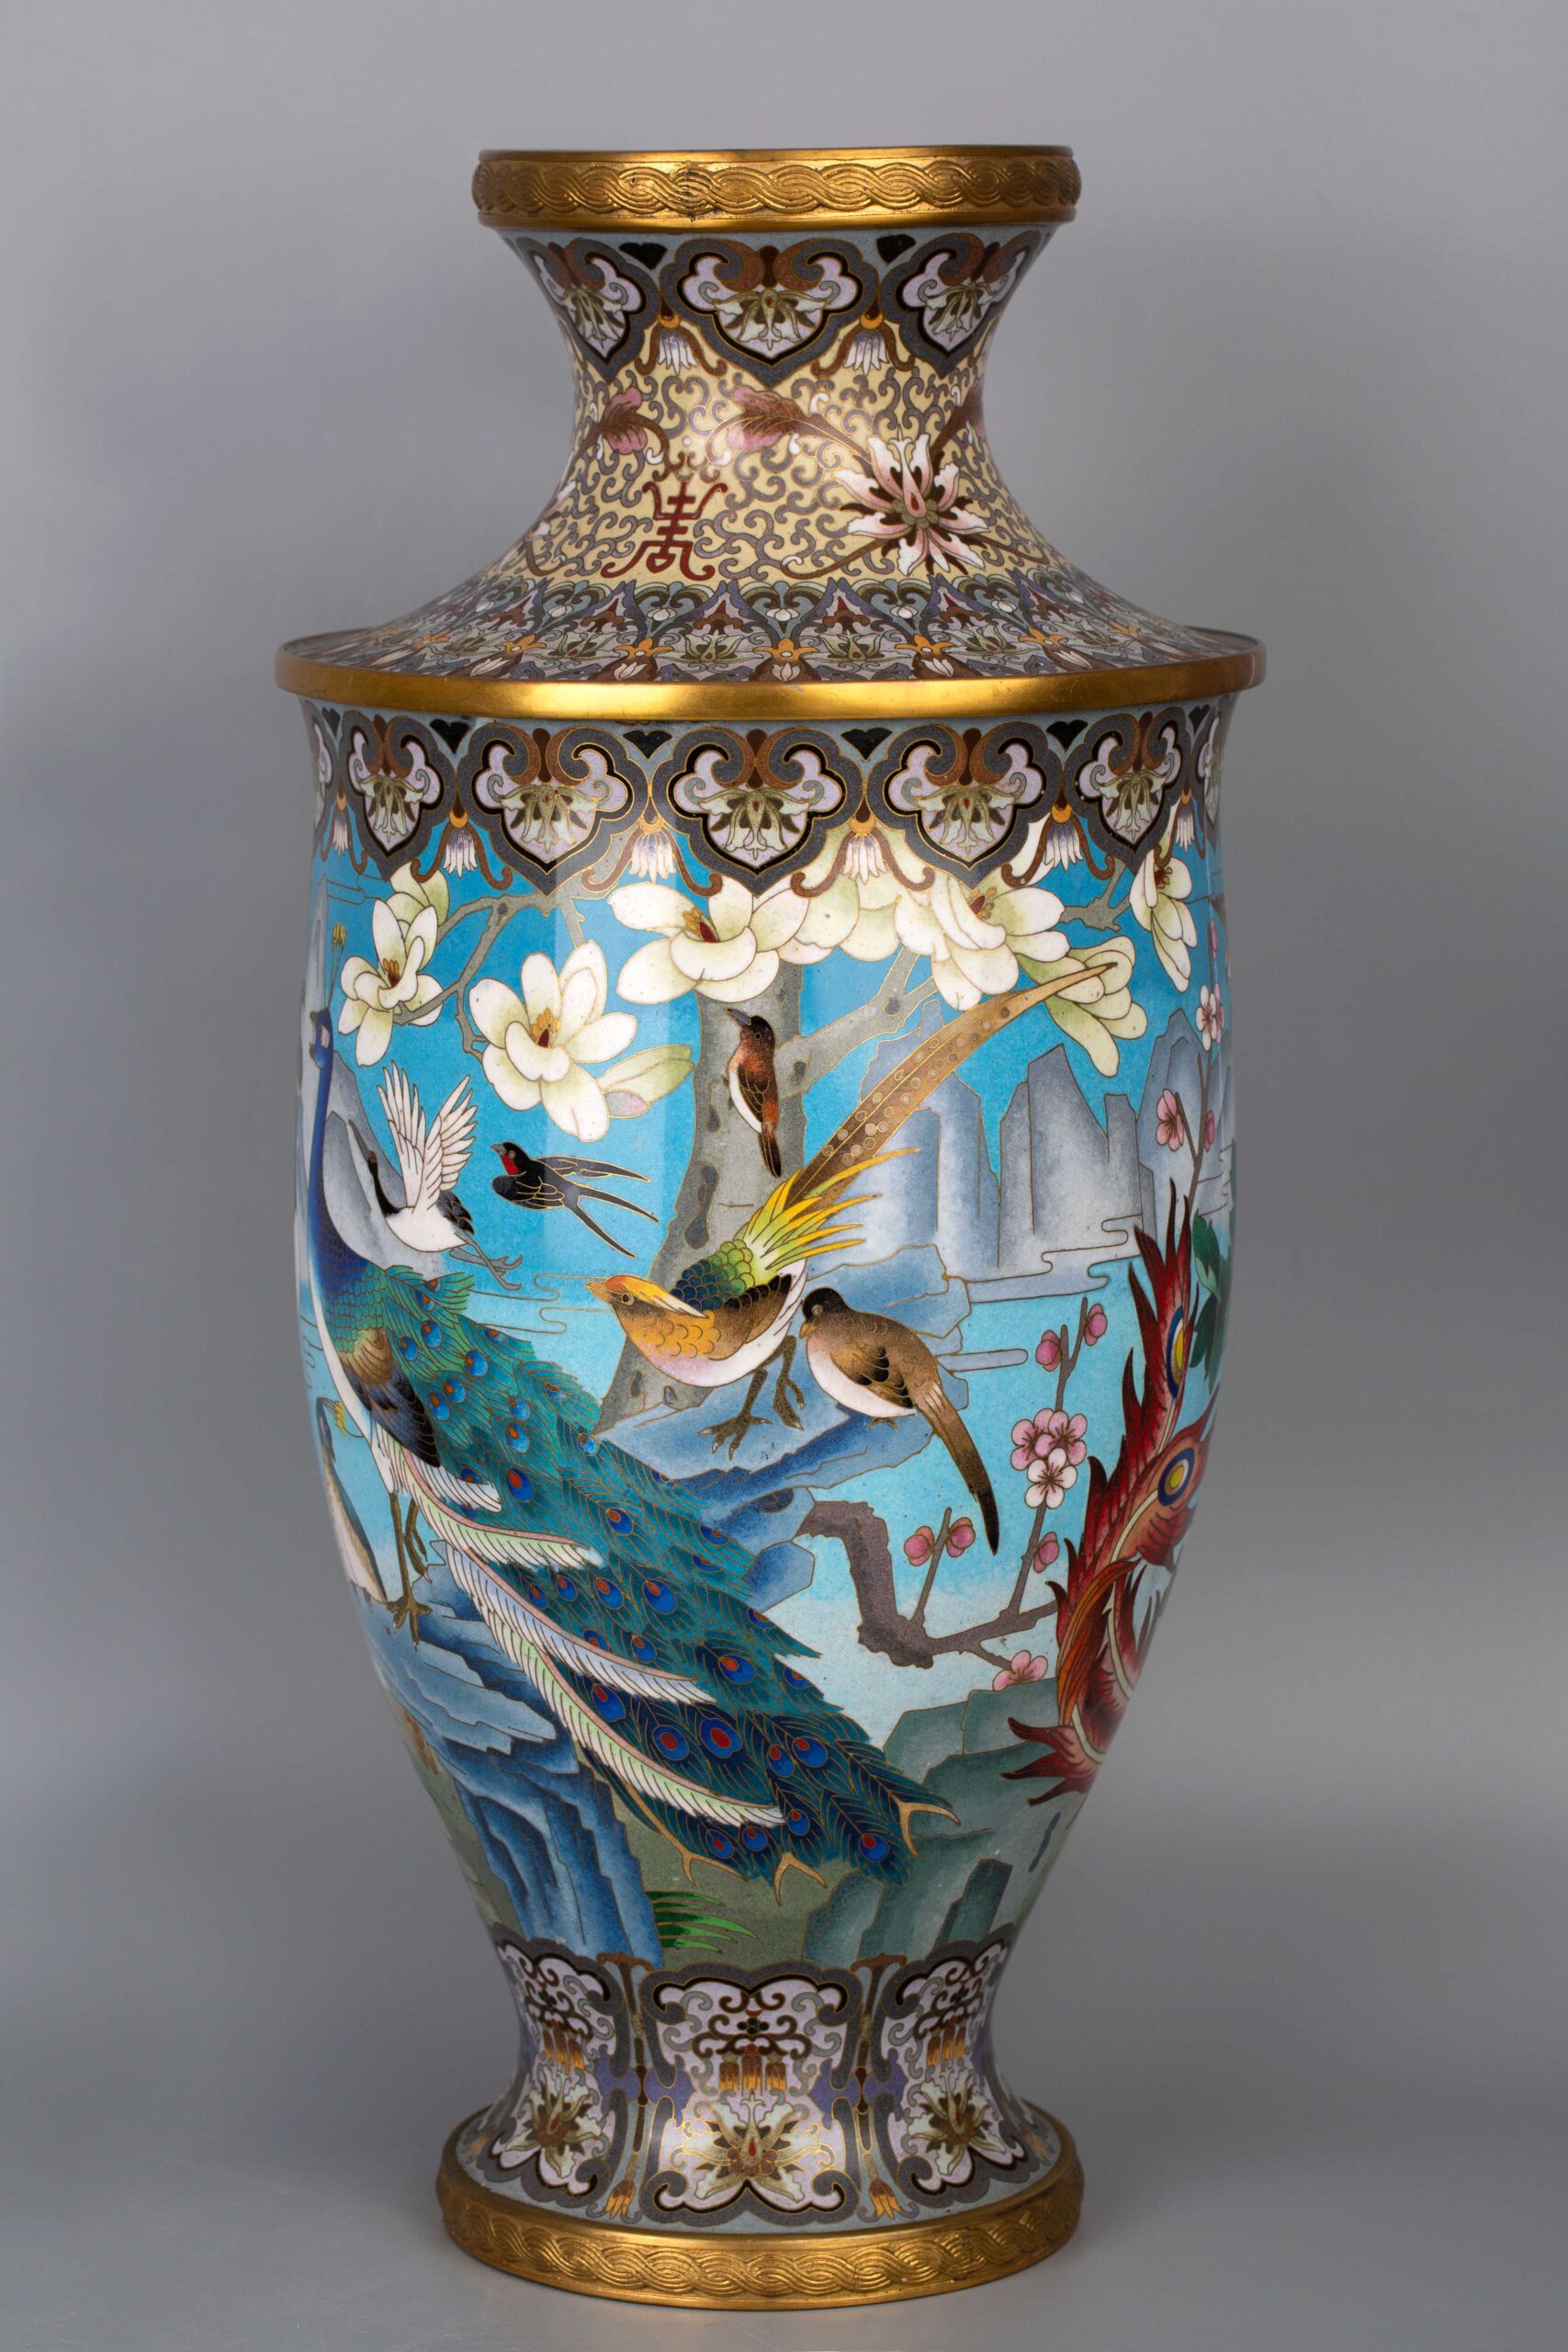 Cloisonné Enamel Flower and Bird Vase景泰蓝花鸟赏瓶– Time Art 